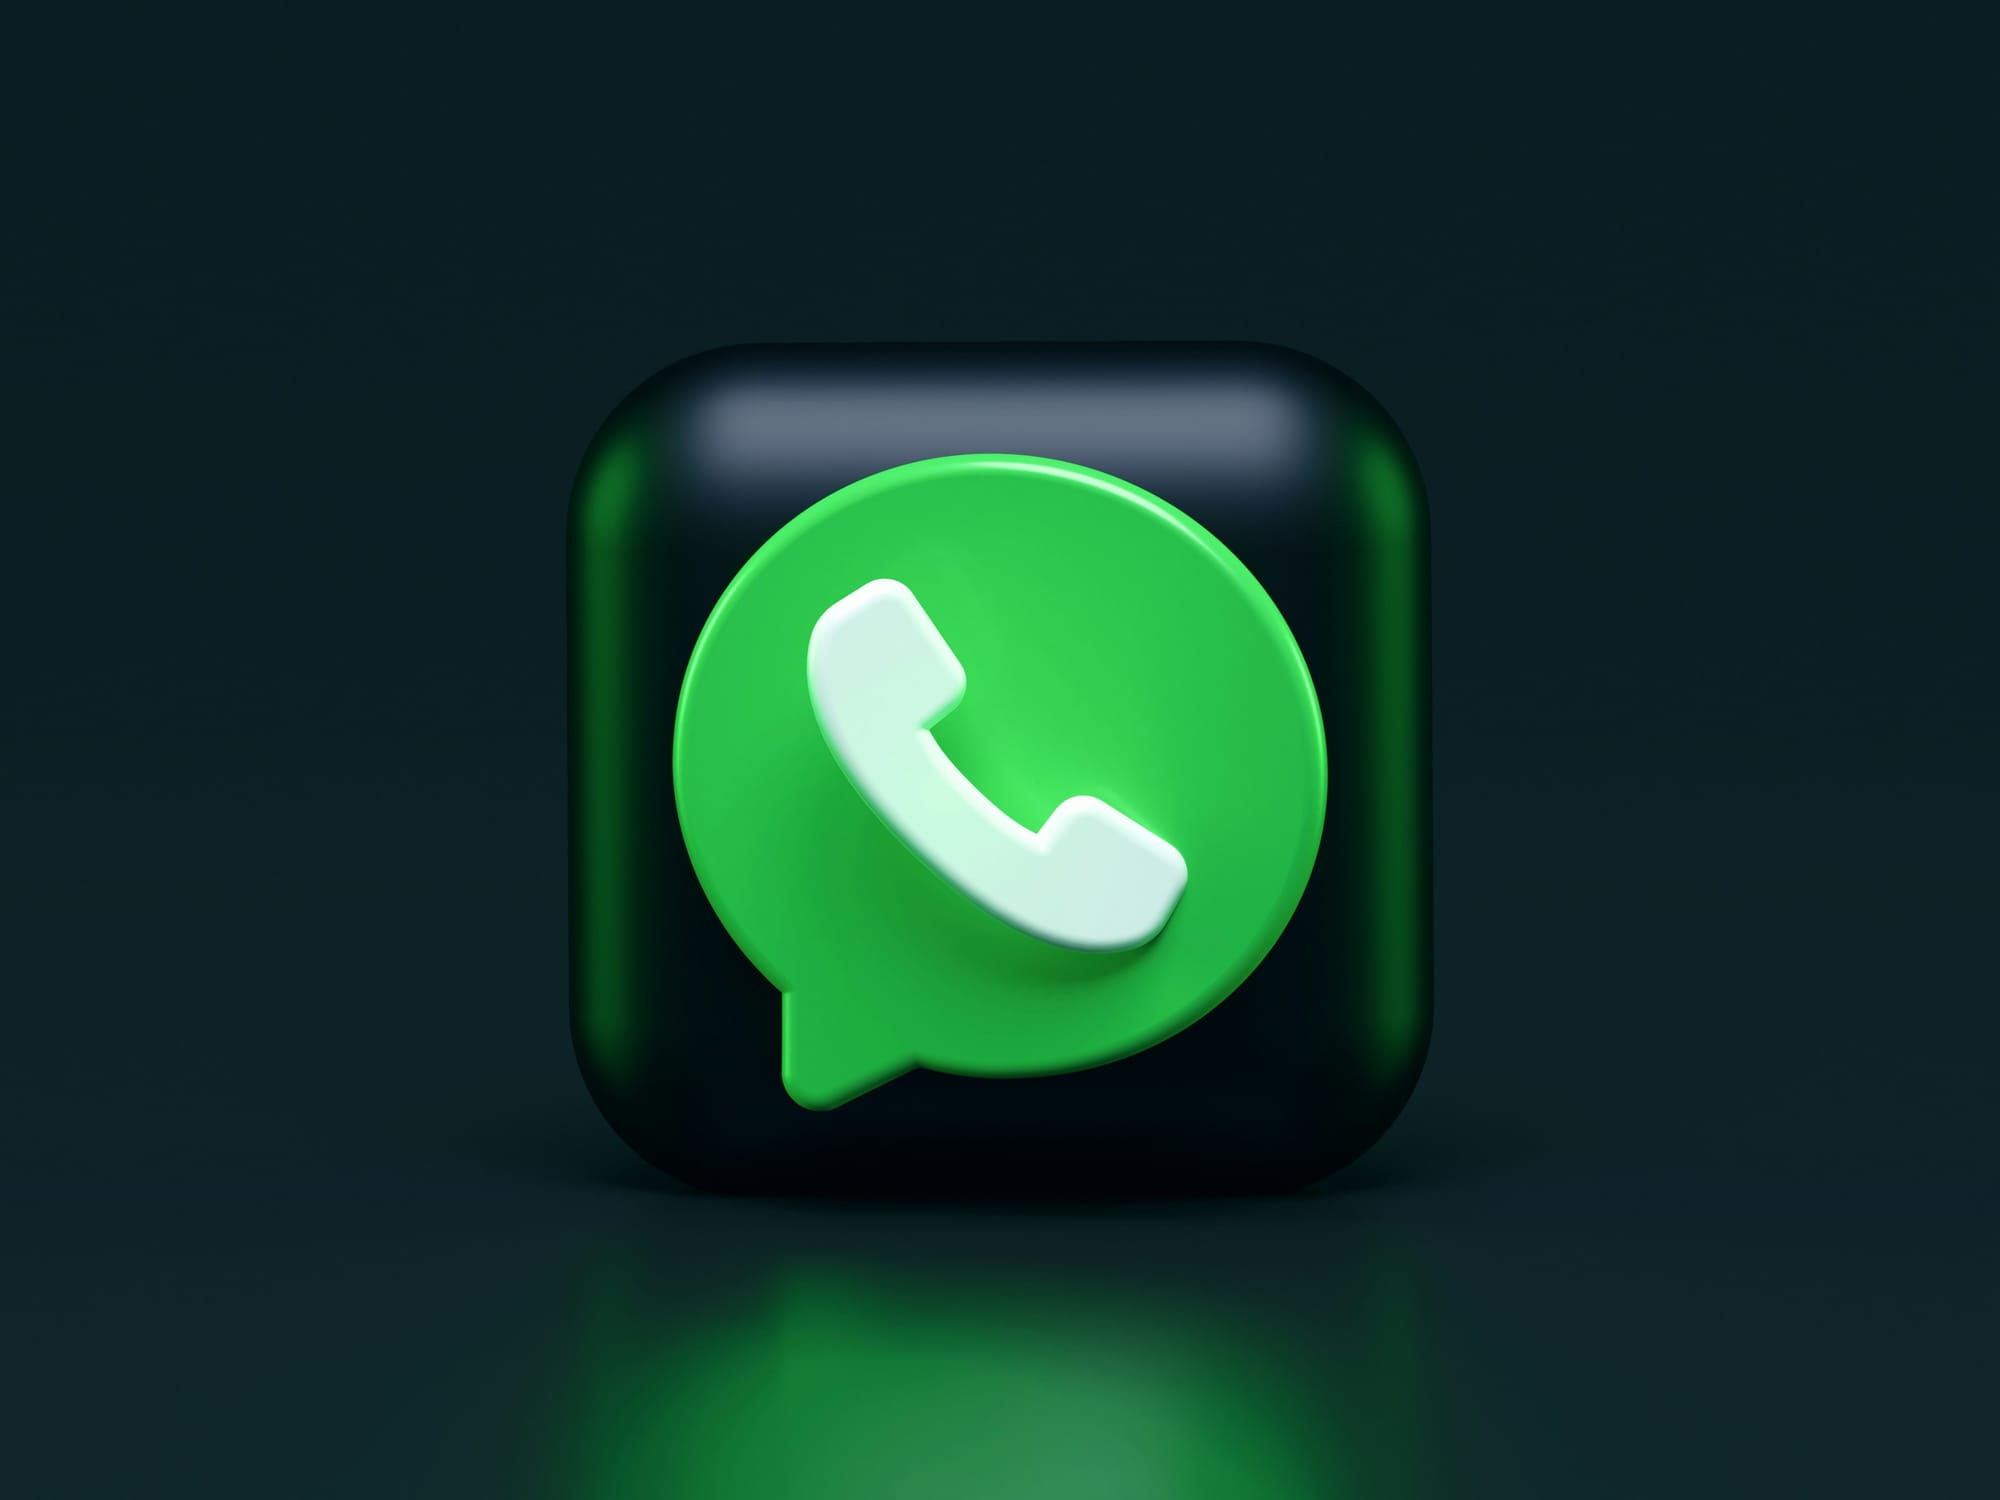 WhatsApp logo in green and black